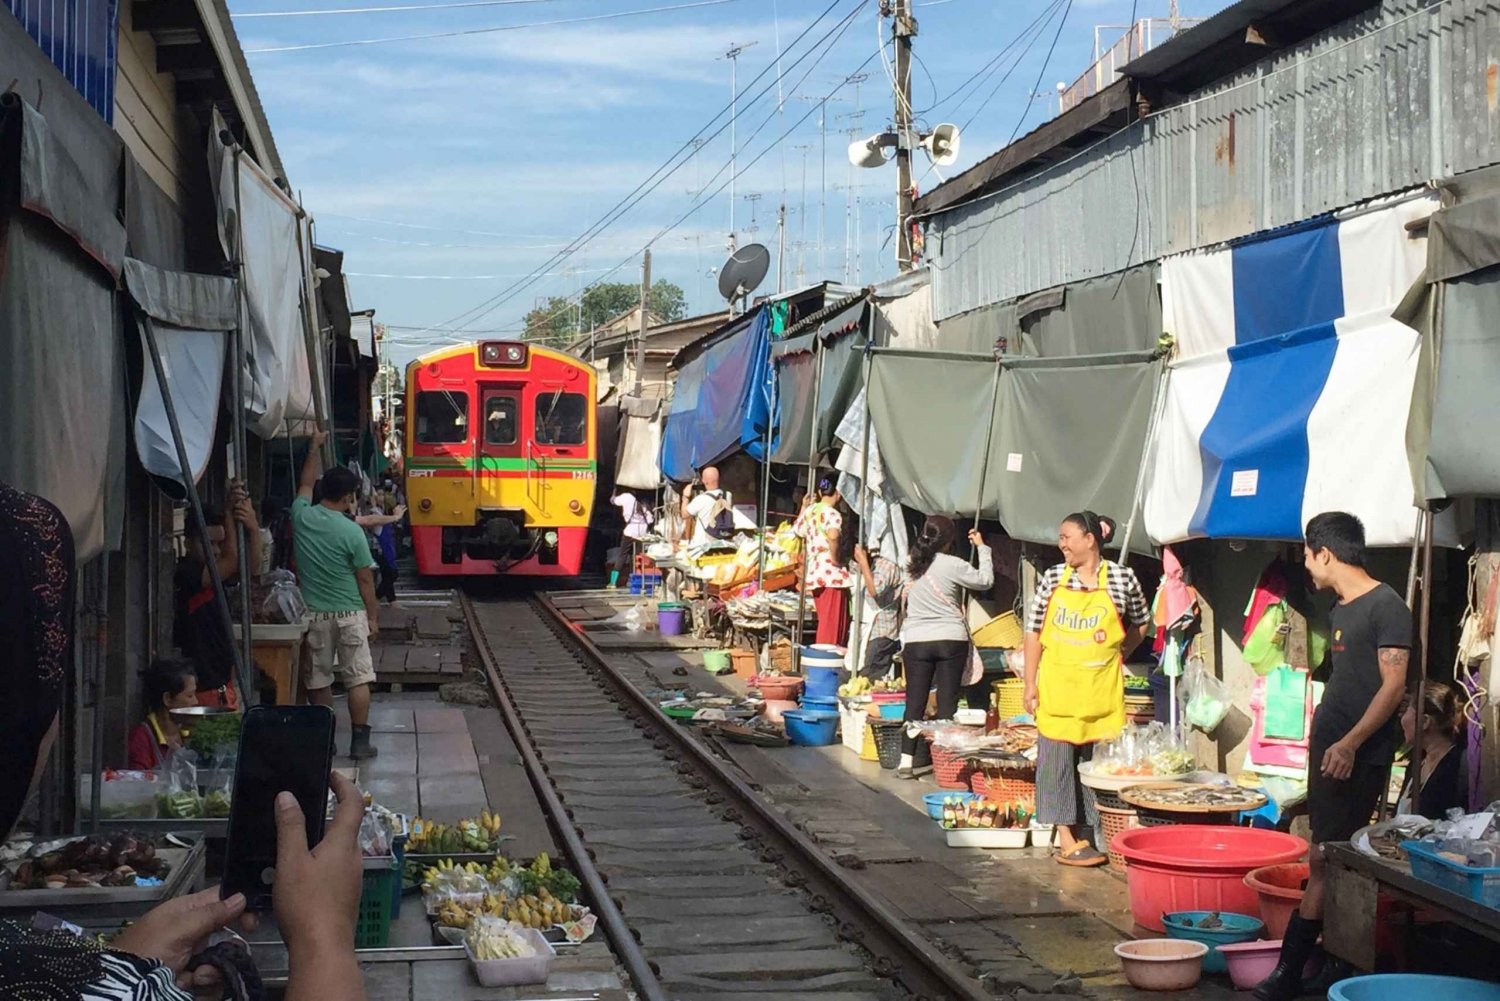 Bangkokista: Bangkok: Kanchanaburi Tour with Floating Market Visit (Kanchanaburi kiertoajelu)